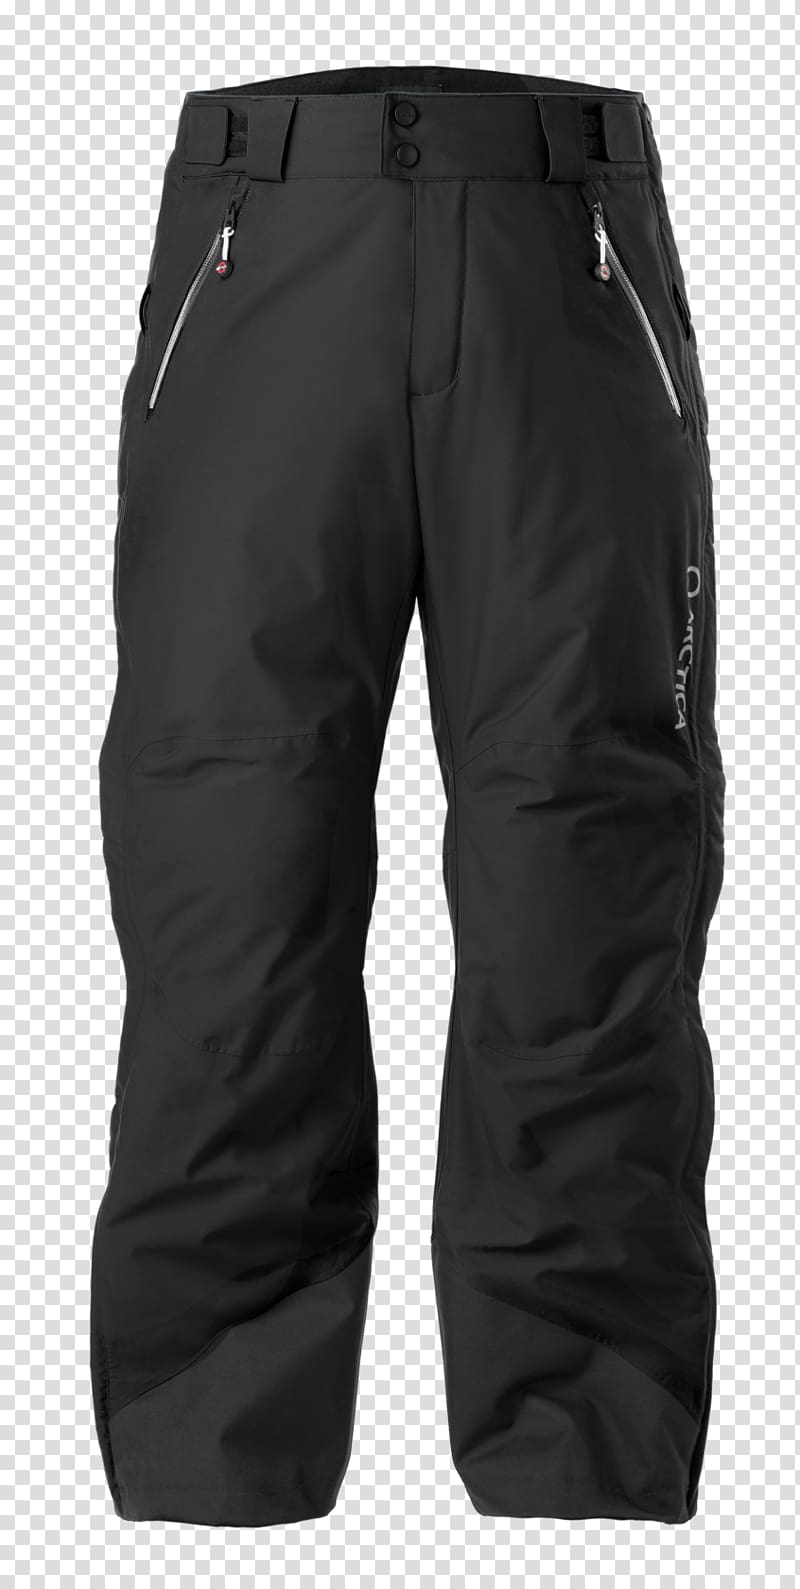 Hoodie Zipper Pants Skiing Clothing, pants zipper transparent background PNG clipart